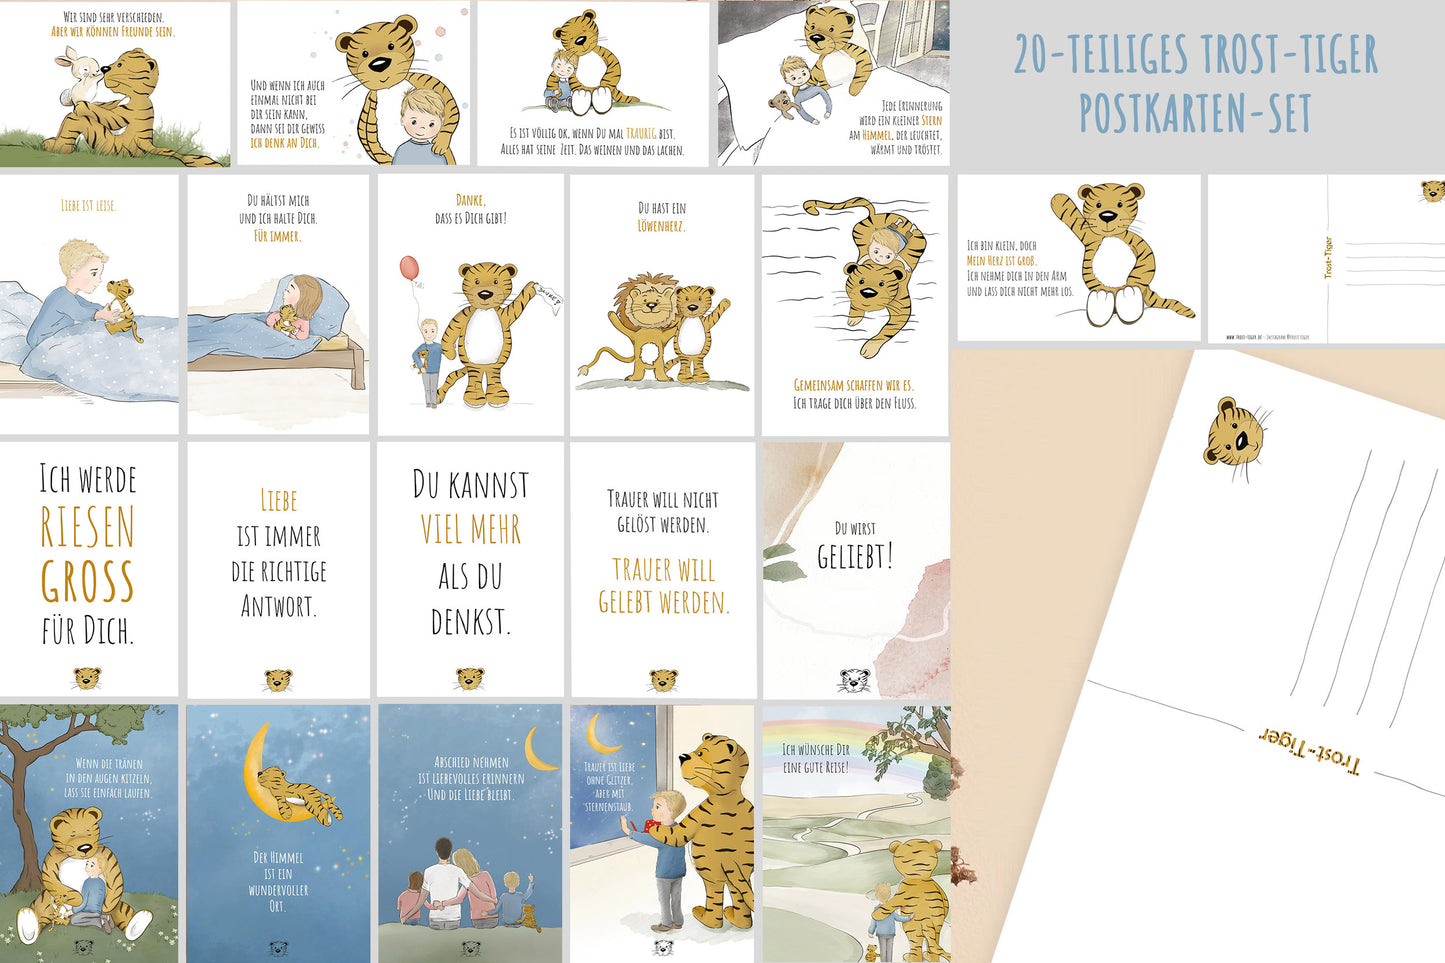 Das große Trost-Tiger Postkarten-Set (20 zauberhafte Trost-Postkarten)